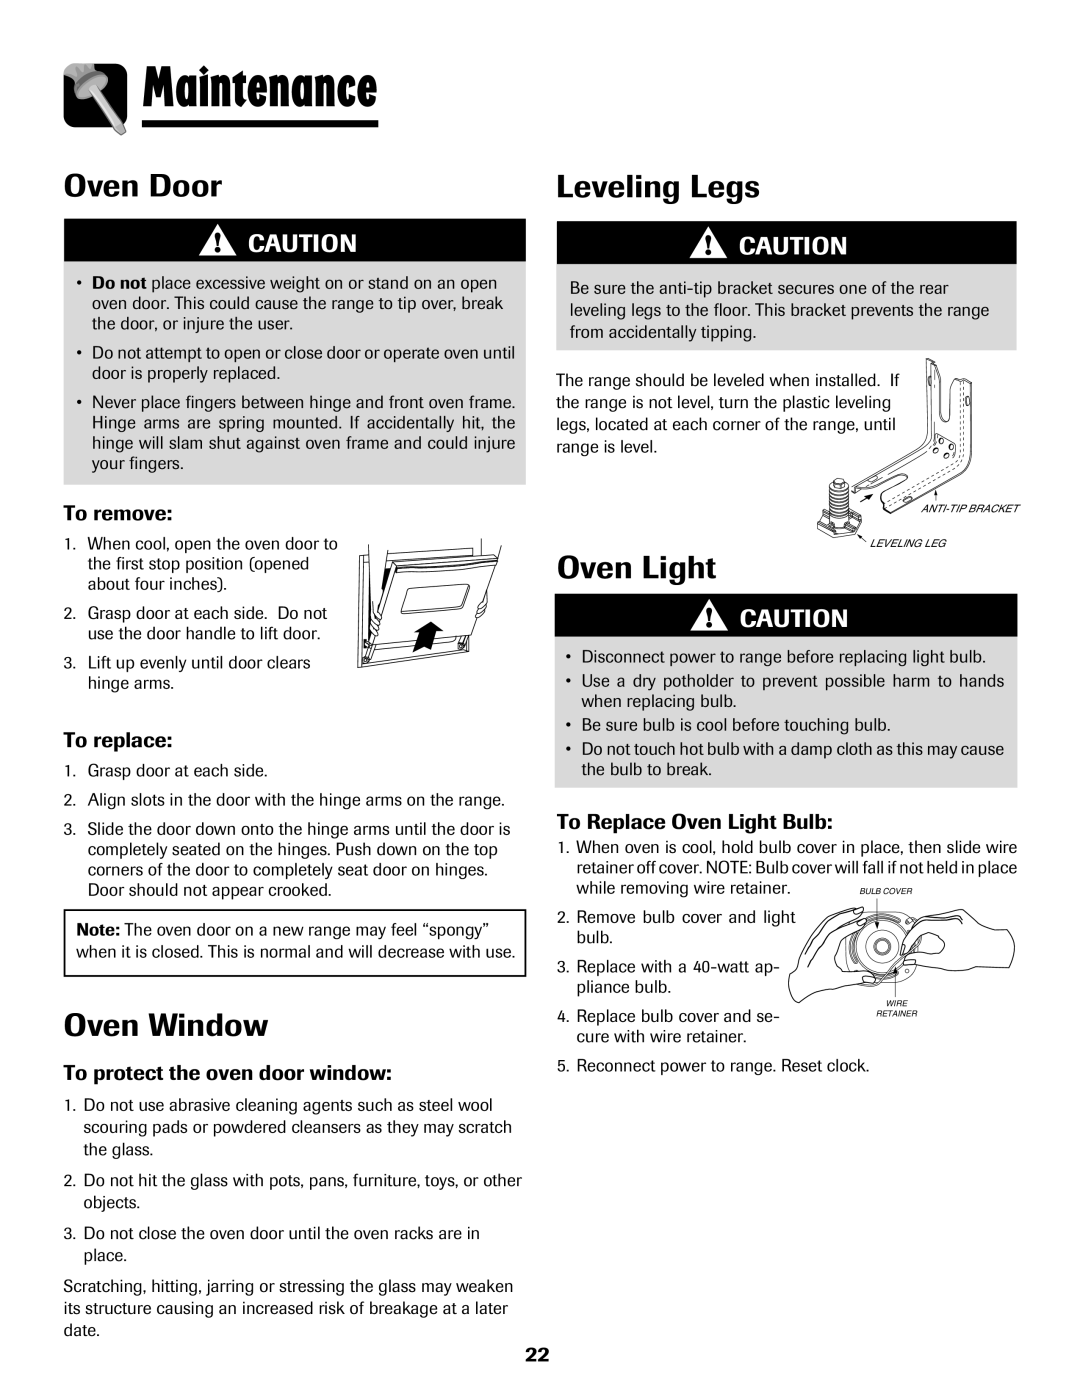 Maytag 8113P424-60 manual Maintenance, Oven Door, Oven Window, Leveling Legs, To protect the oven door window, Oven Light 